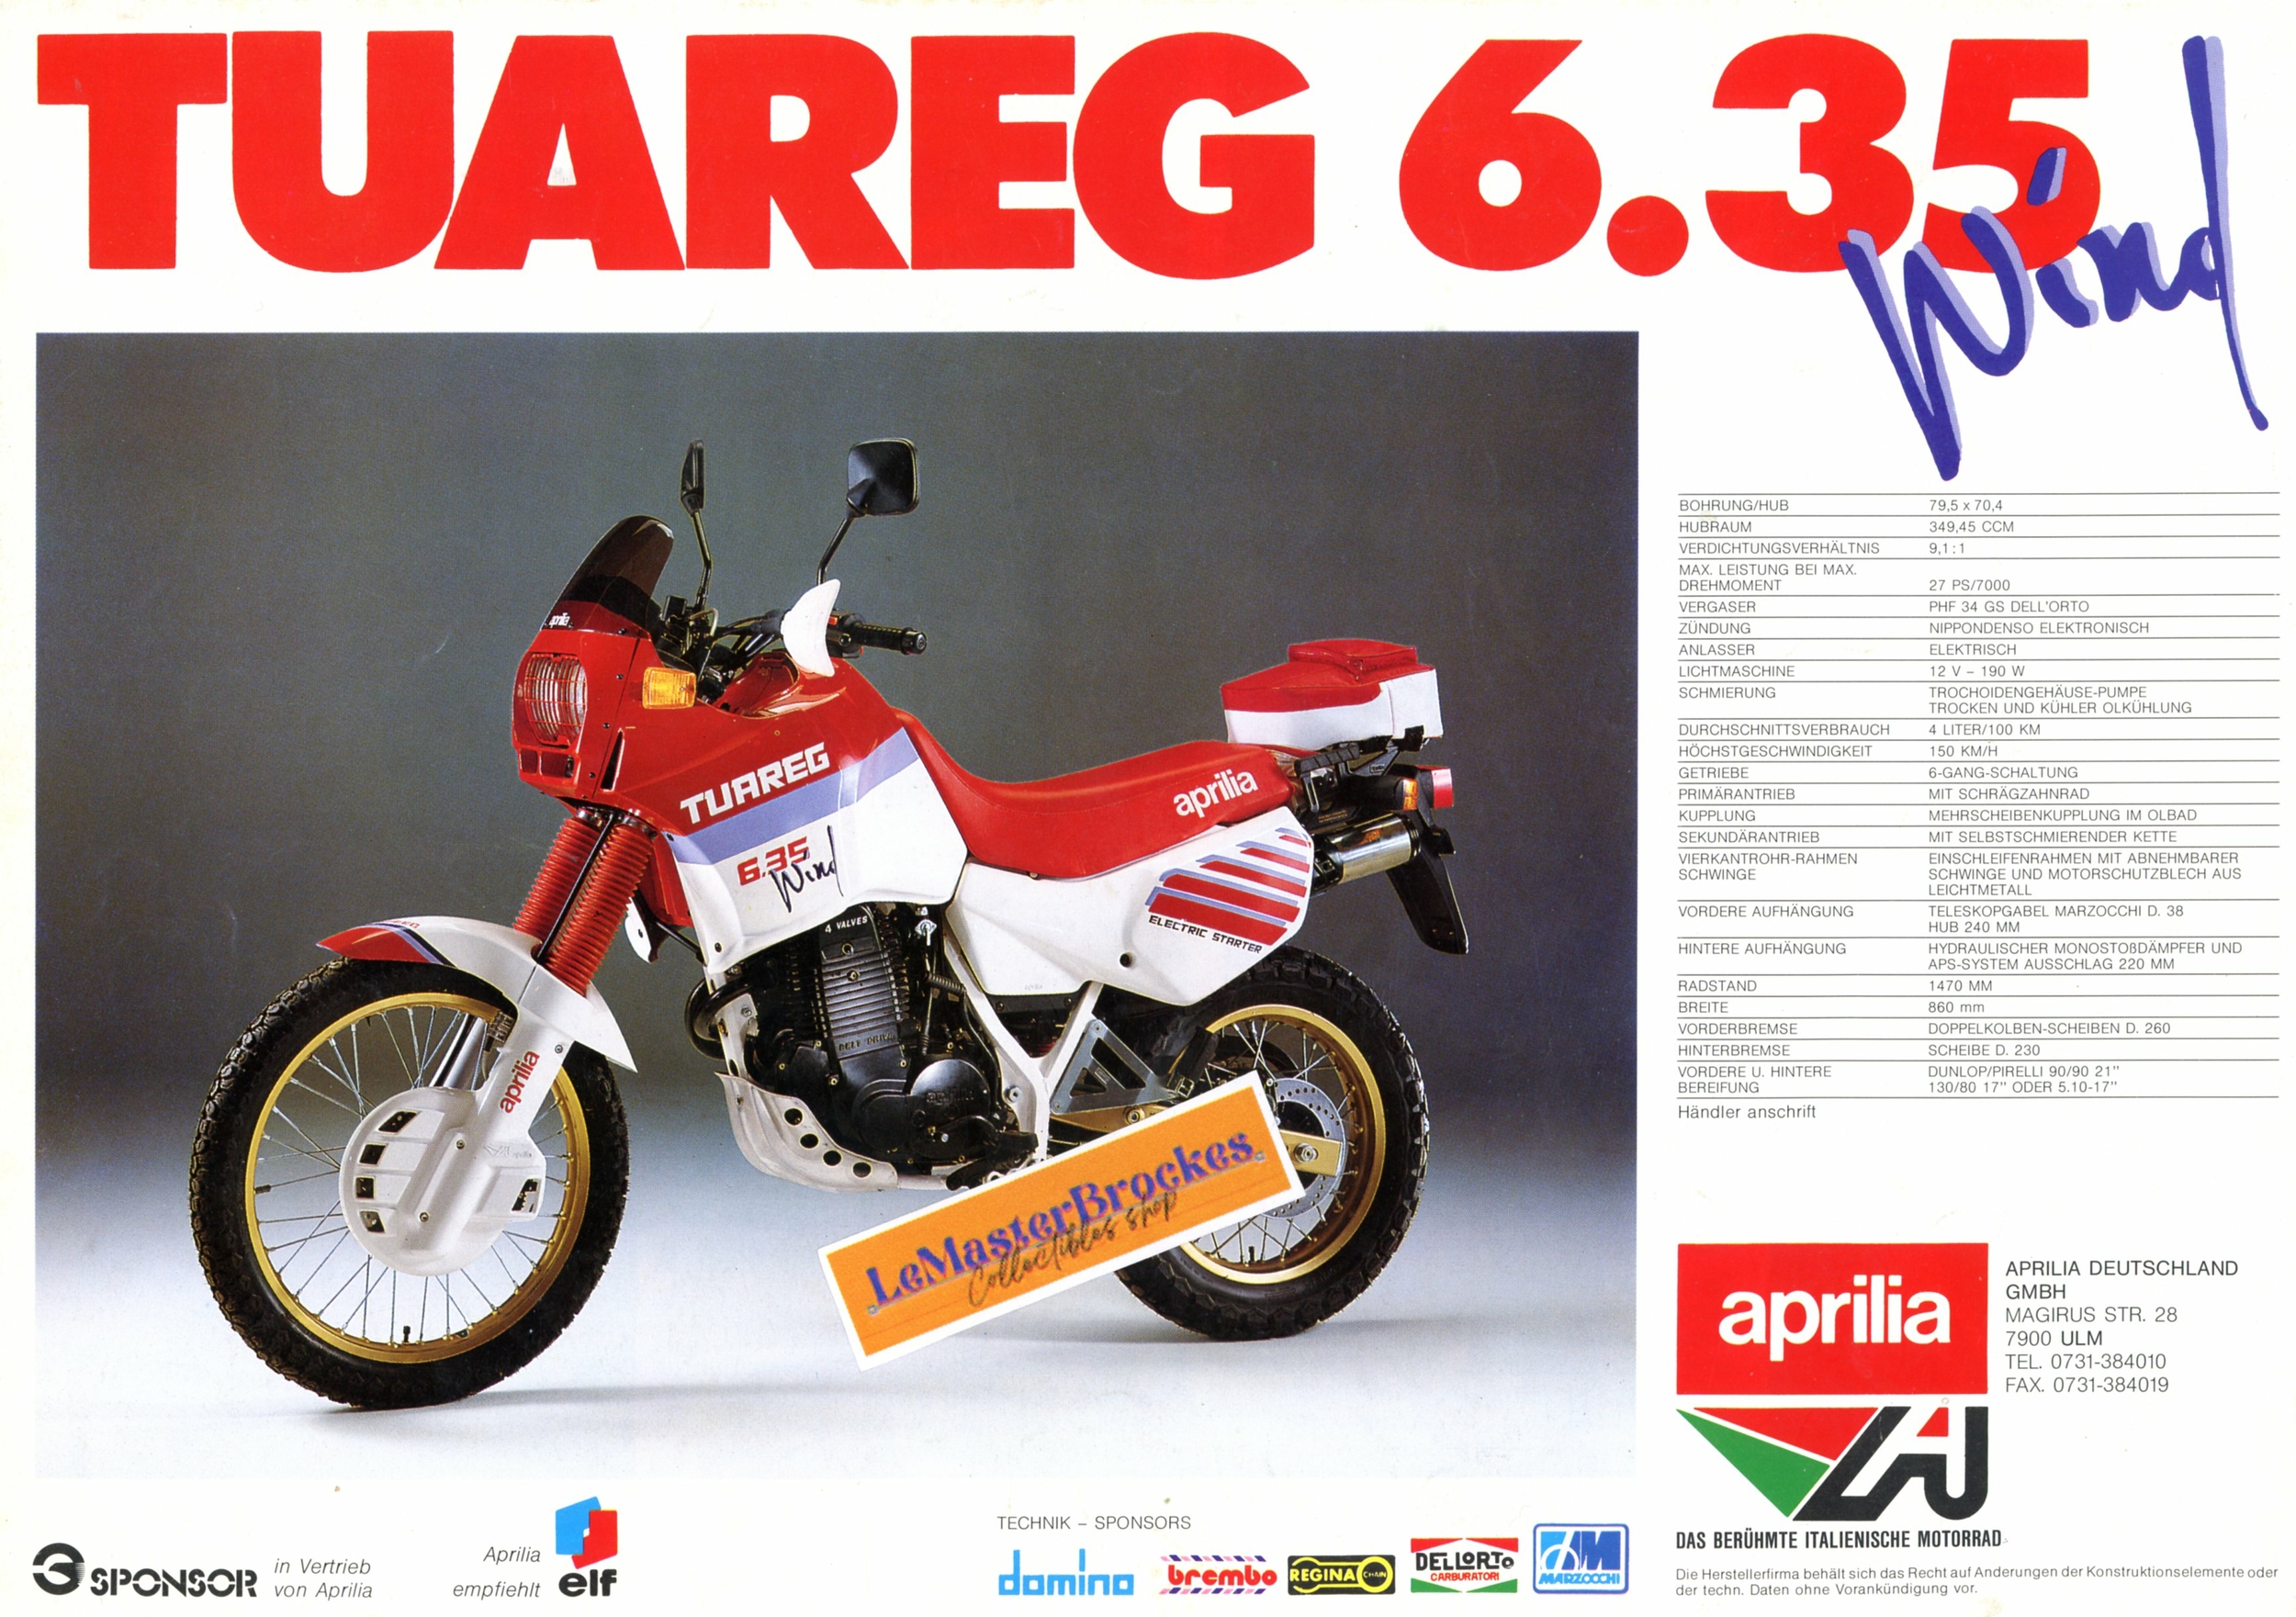 BROCHURE-MOTO-APRILIA-TUAREG-6-35-WIND-635-LEMASTERBROCKERS-BROCHURE-MOTORCYCLE